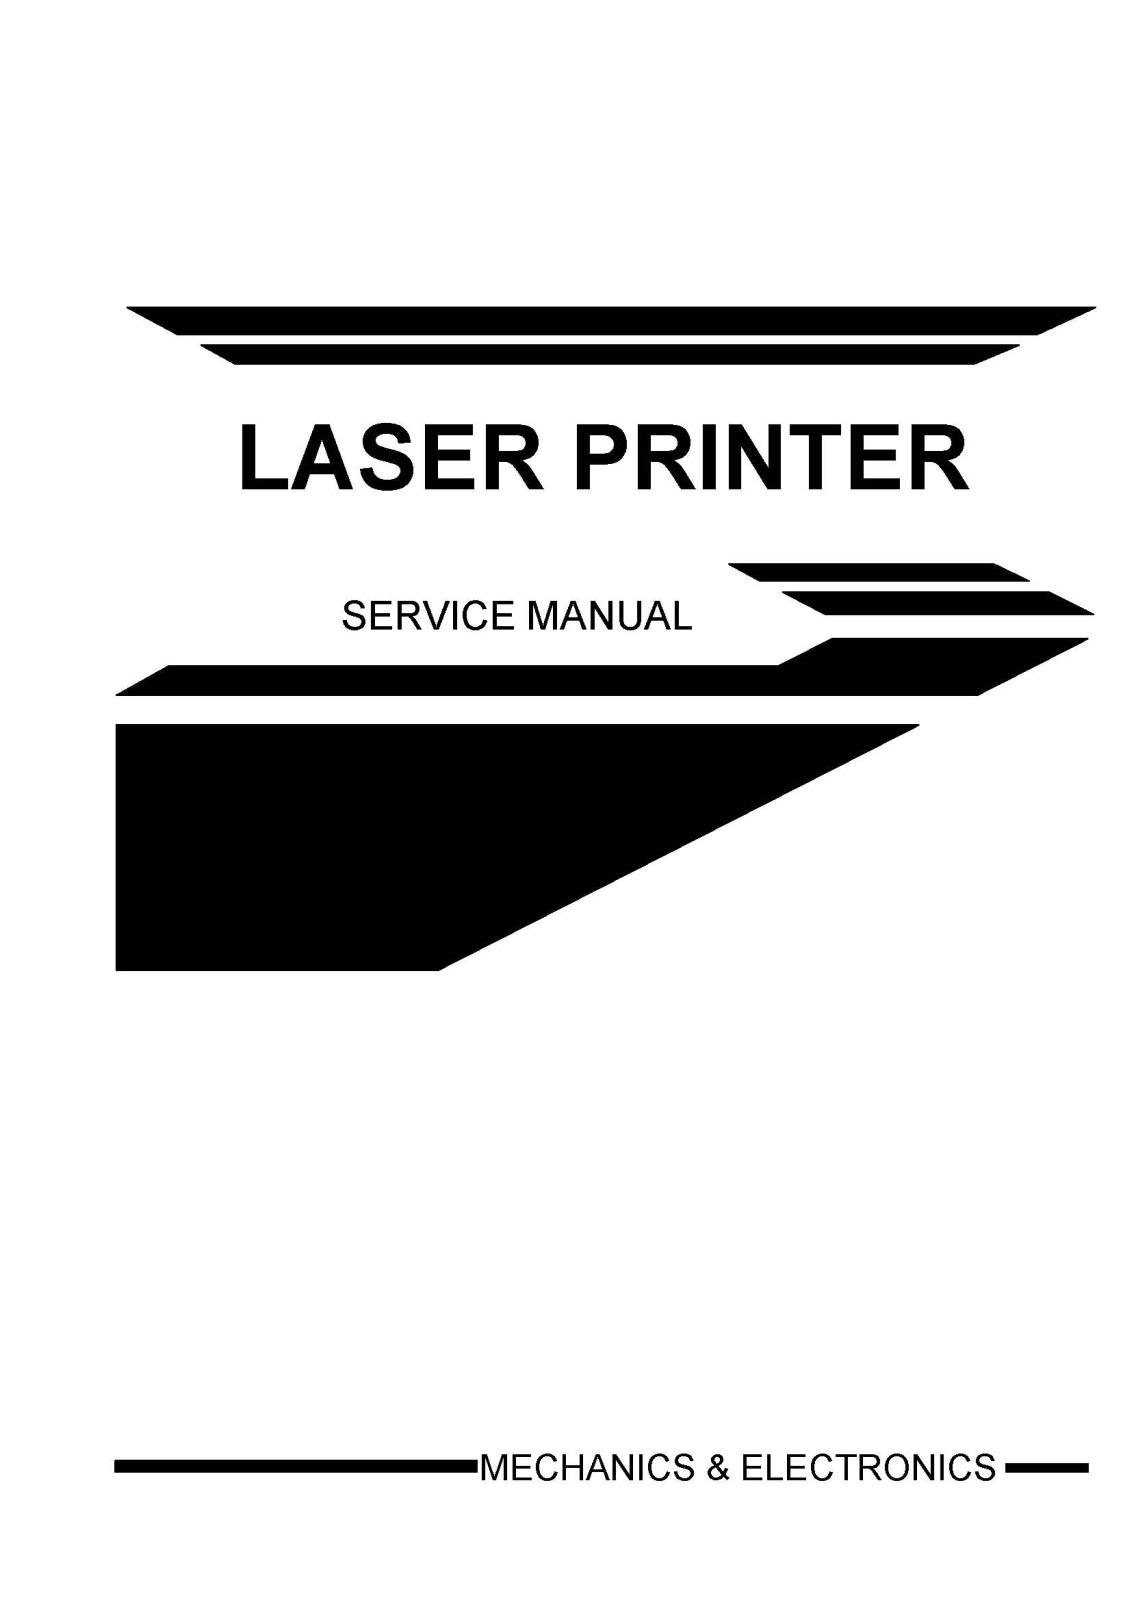 Brother Laser prints Service Manual